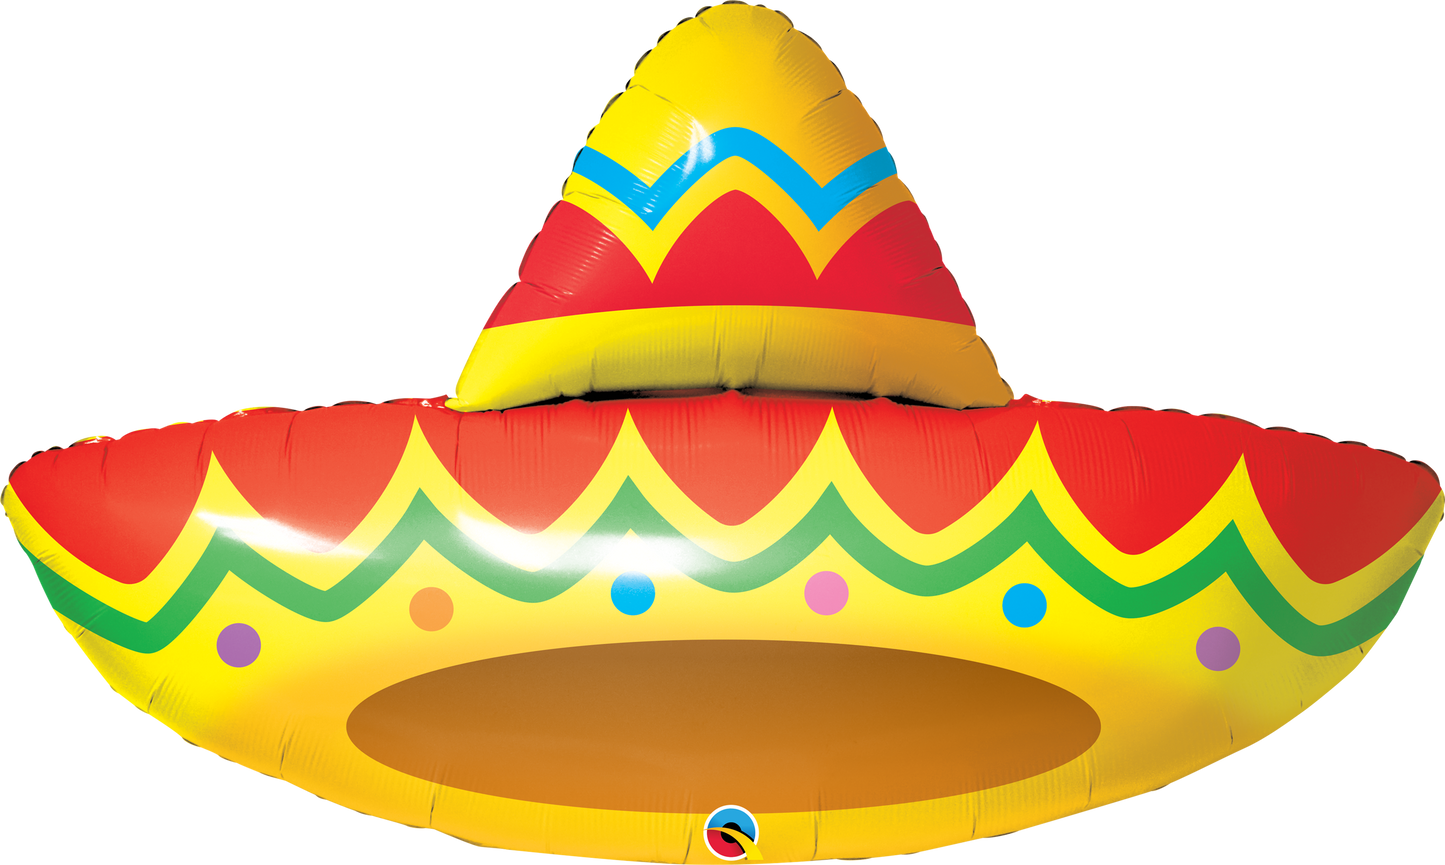 Sombrero Shape